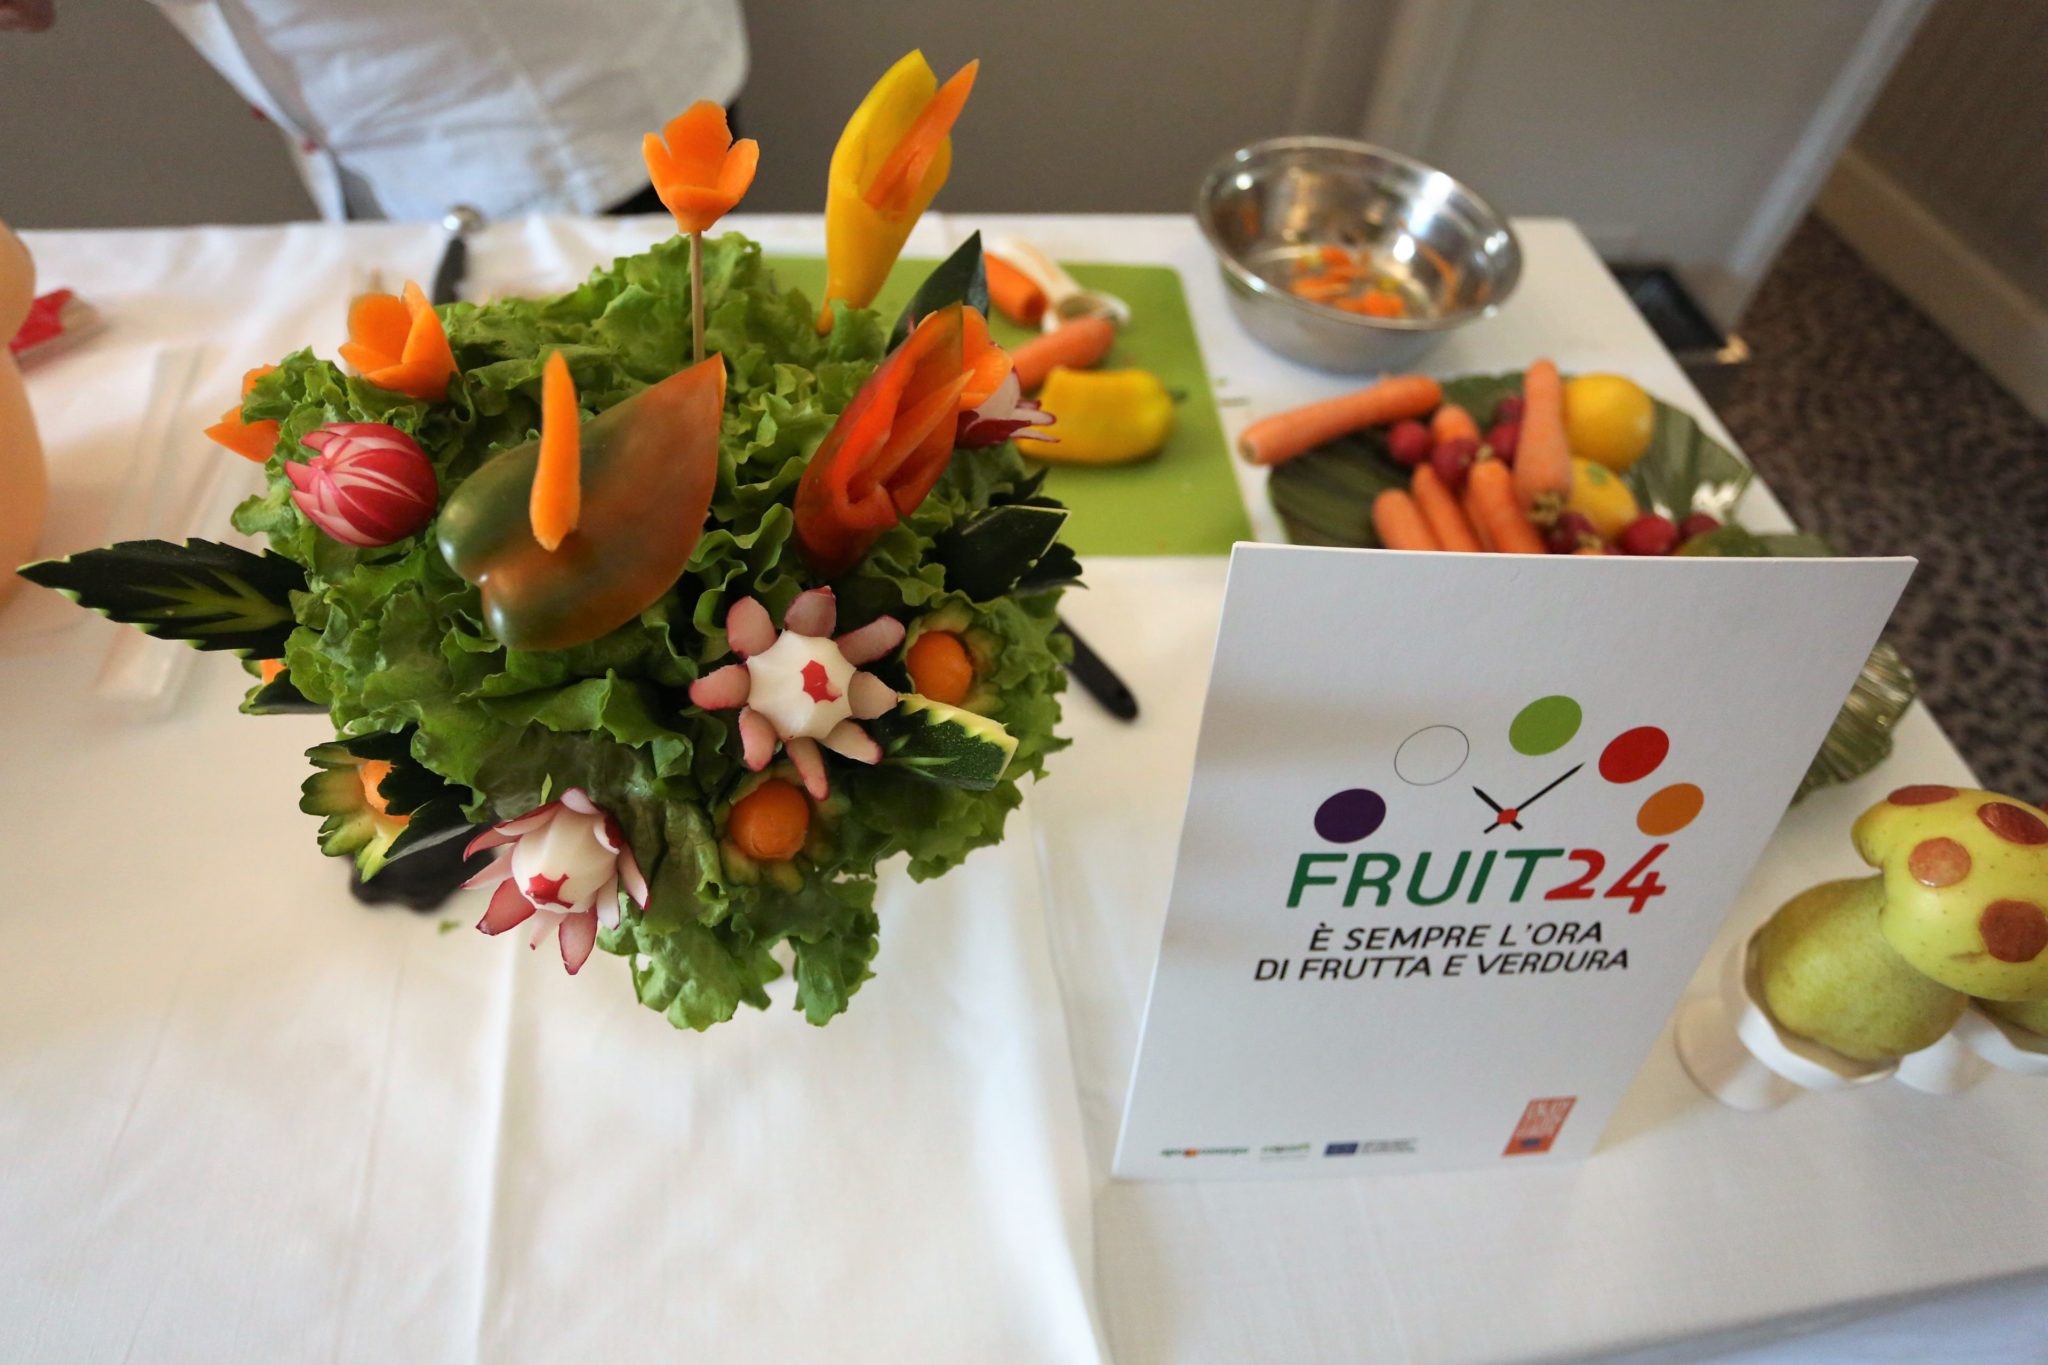 Fruit24